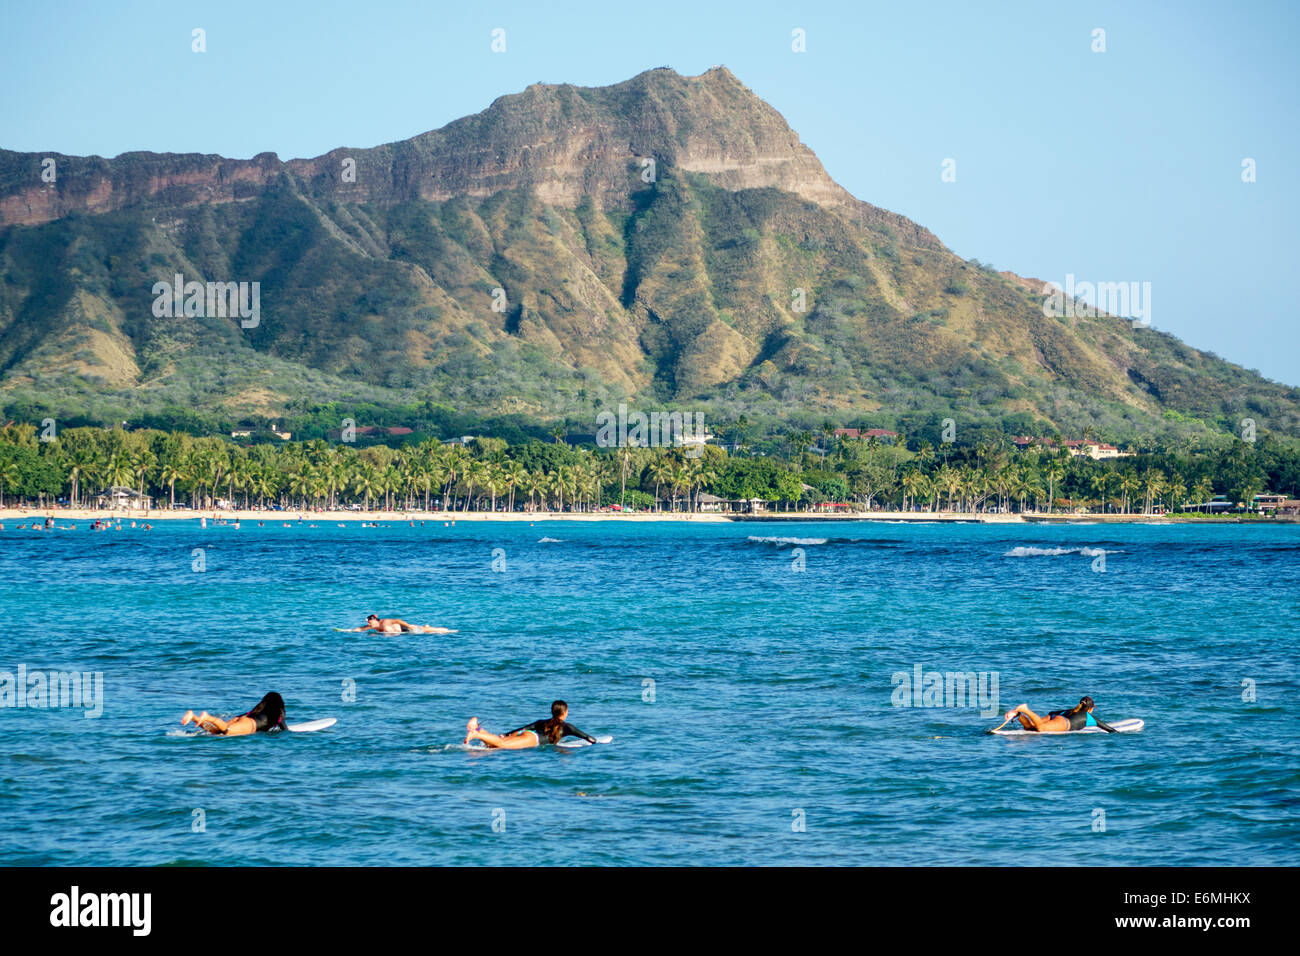 Honolulu Waikiki Beach Hawaii, Hawaiian, Oahu, Pazifischer Ozean, Waikiki Bay, Diamond Head Crater erloschter Vulkan weibliche Surferinnen Stockfoto